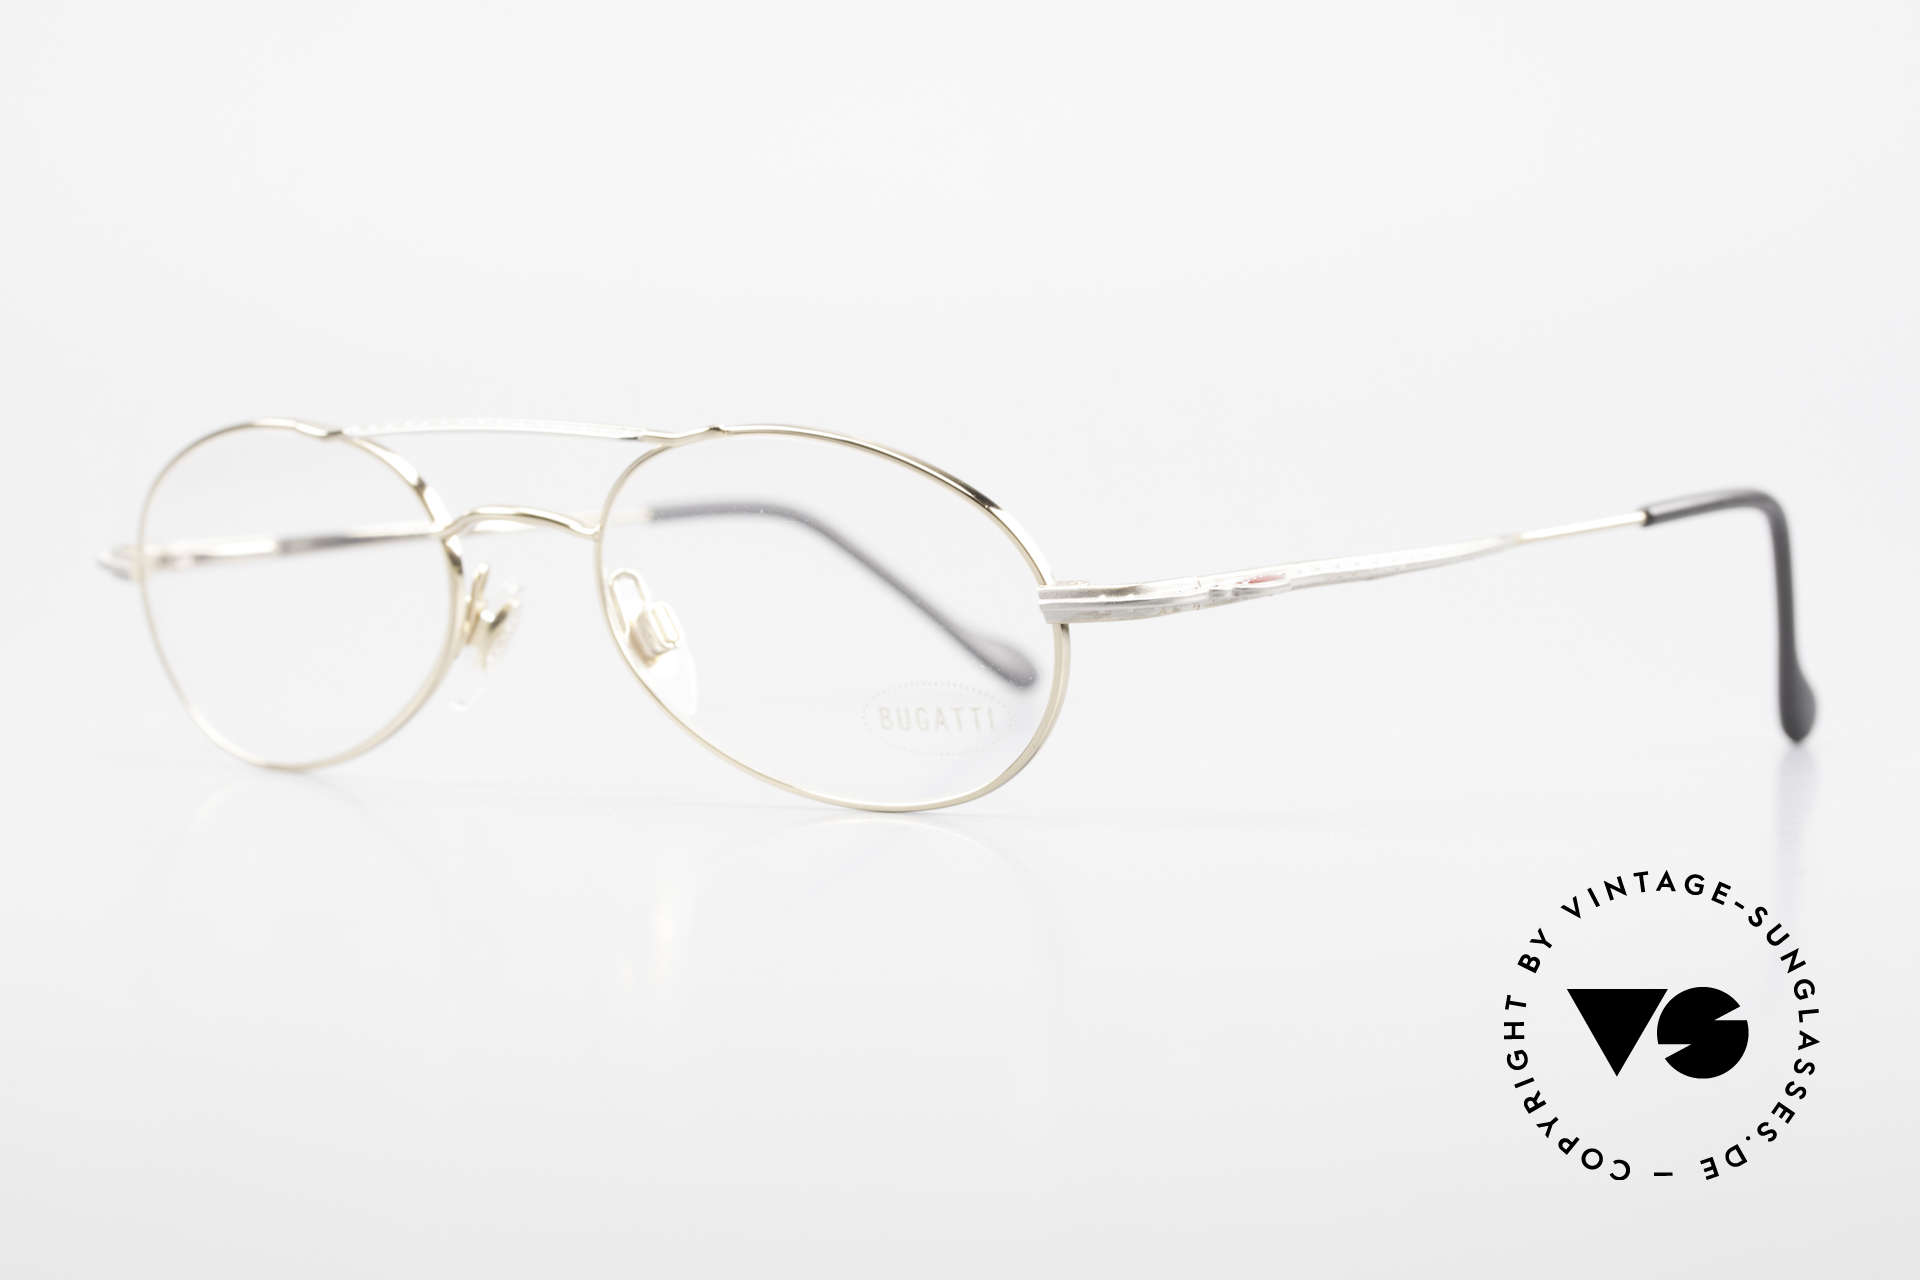 Bugatti 22996 Rare 90's Men's Eyeglass-Frame, flexible spring hinges & lightweight Titanium parts, Made for Men